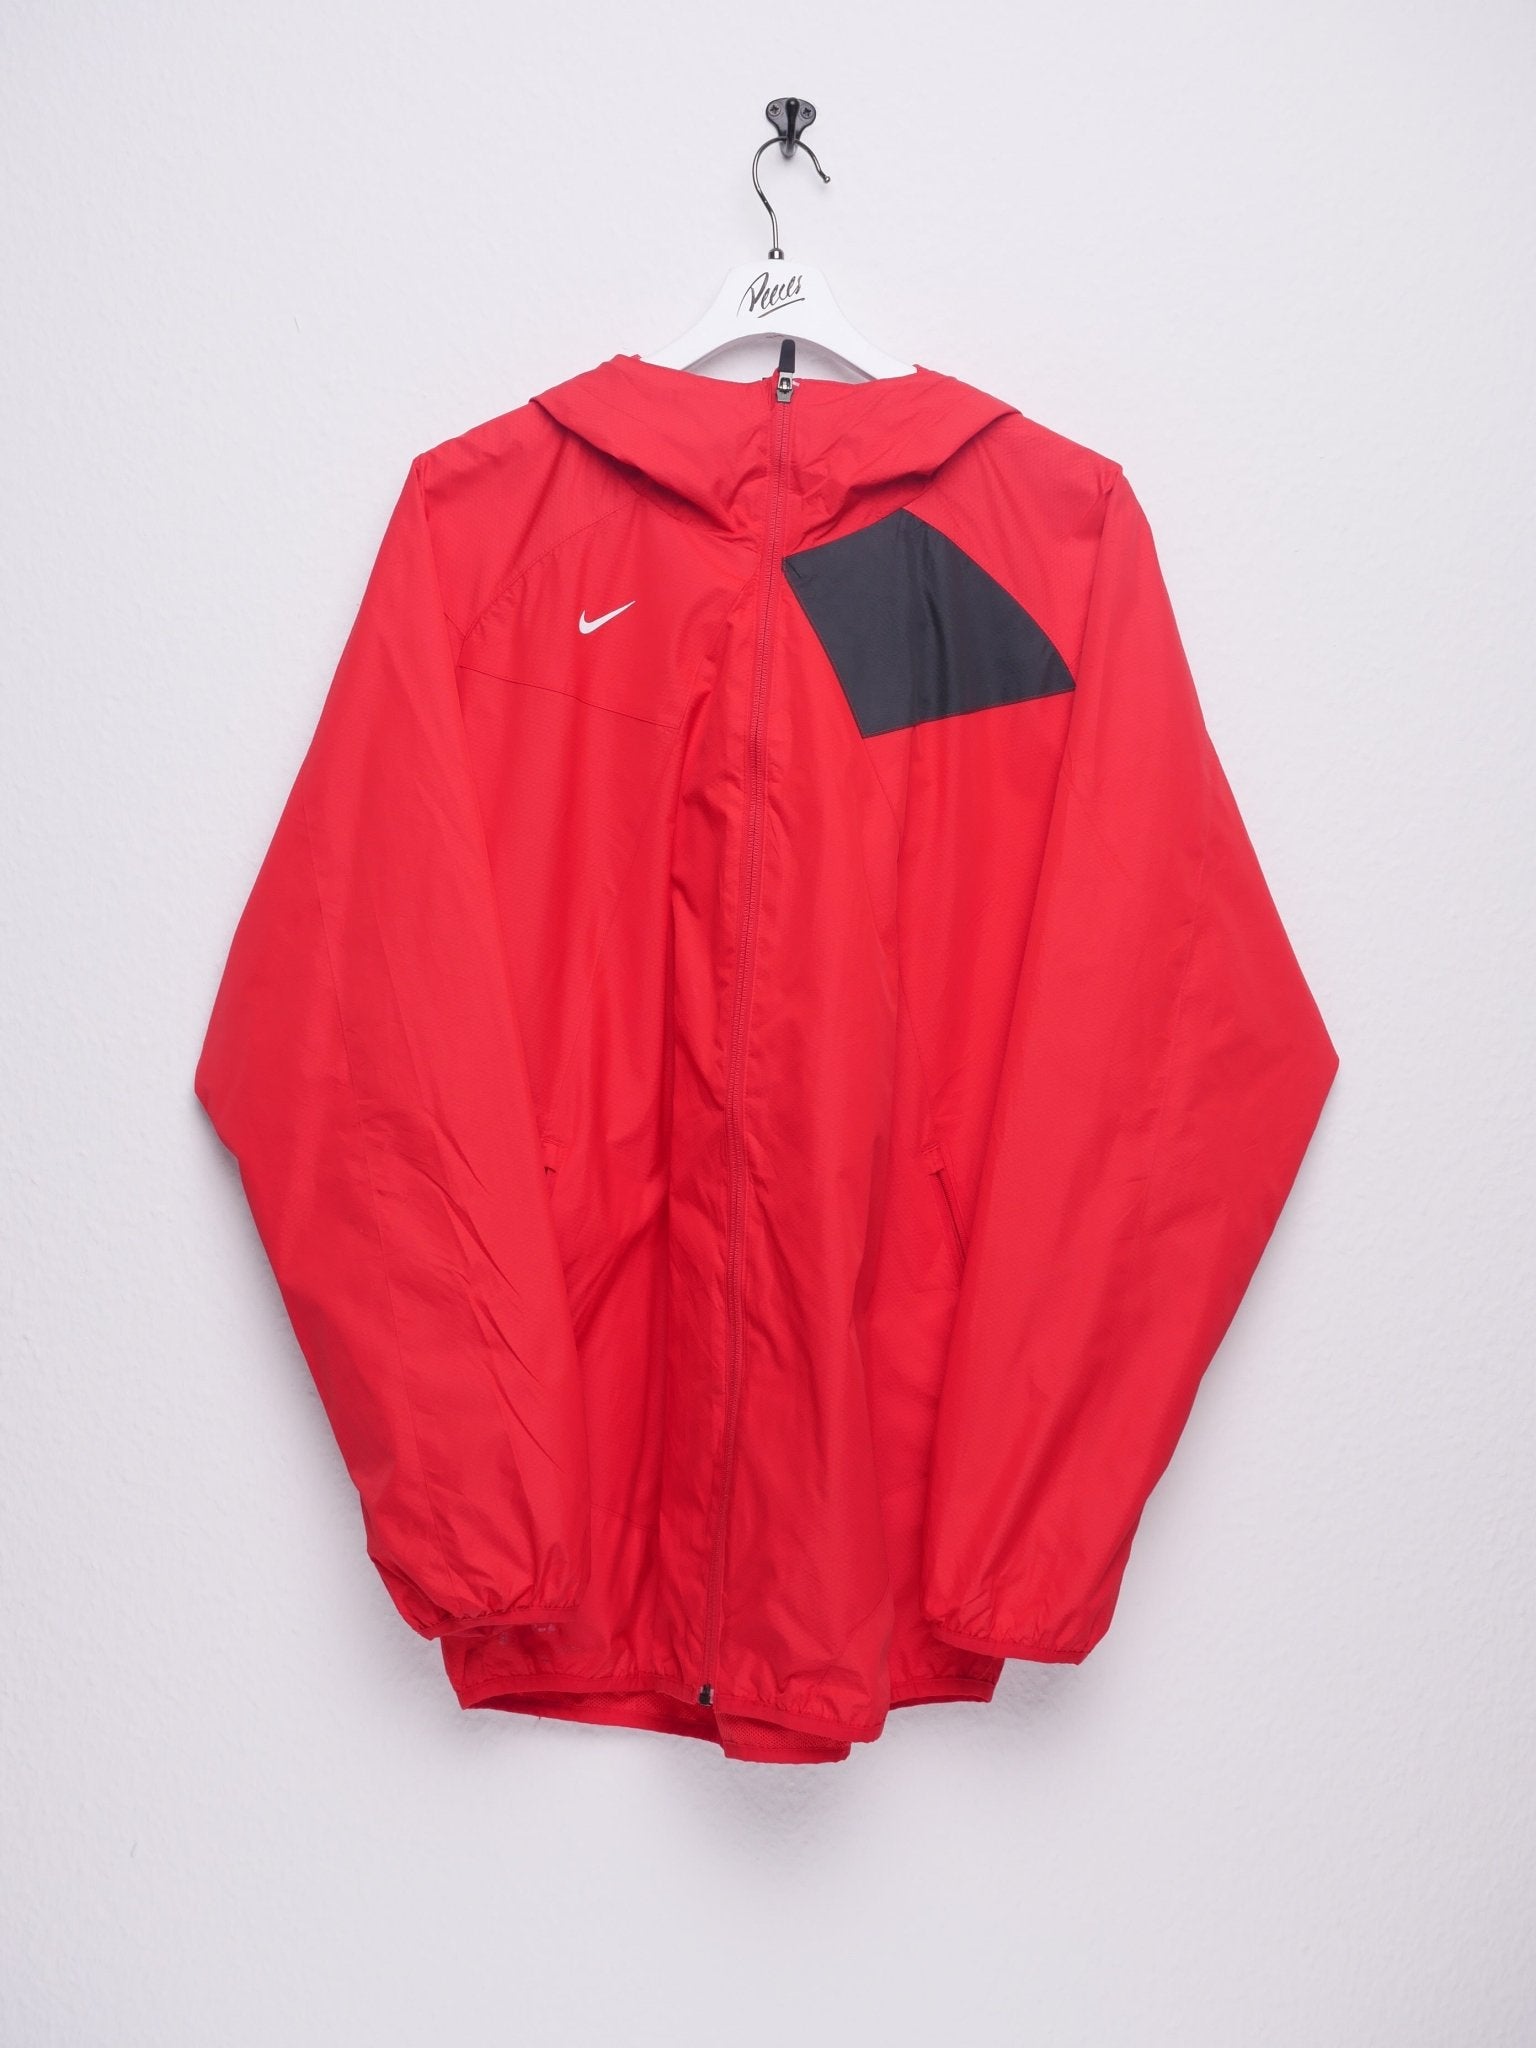 nike printed Swoosh red Track Jacket - Peeces